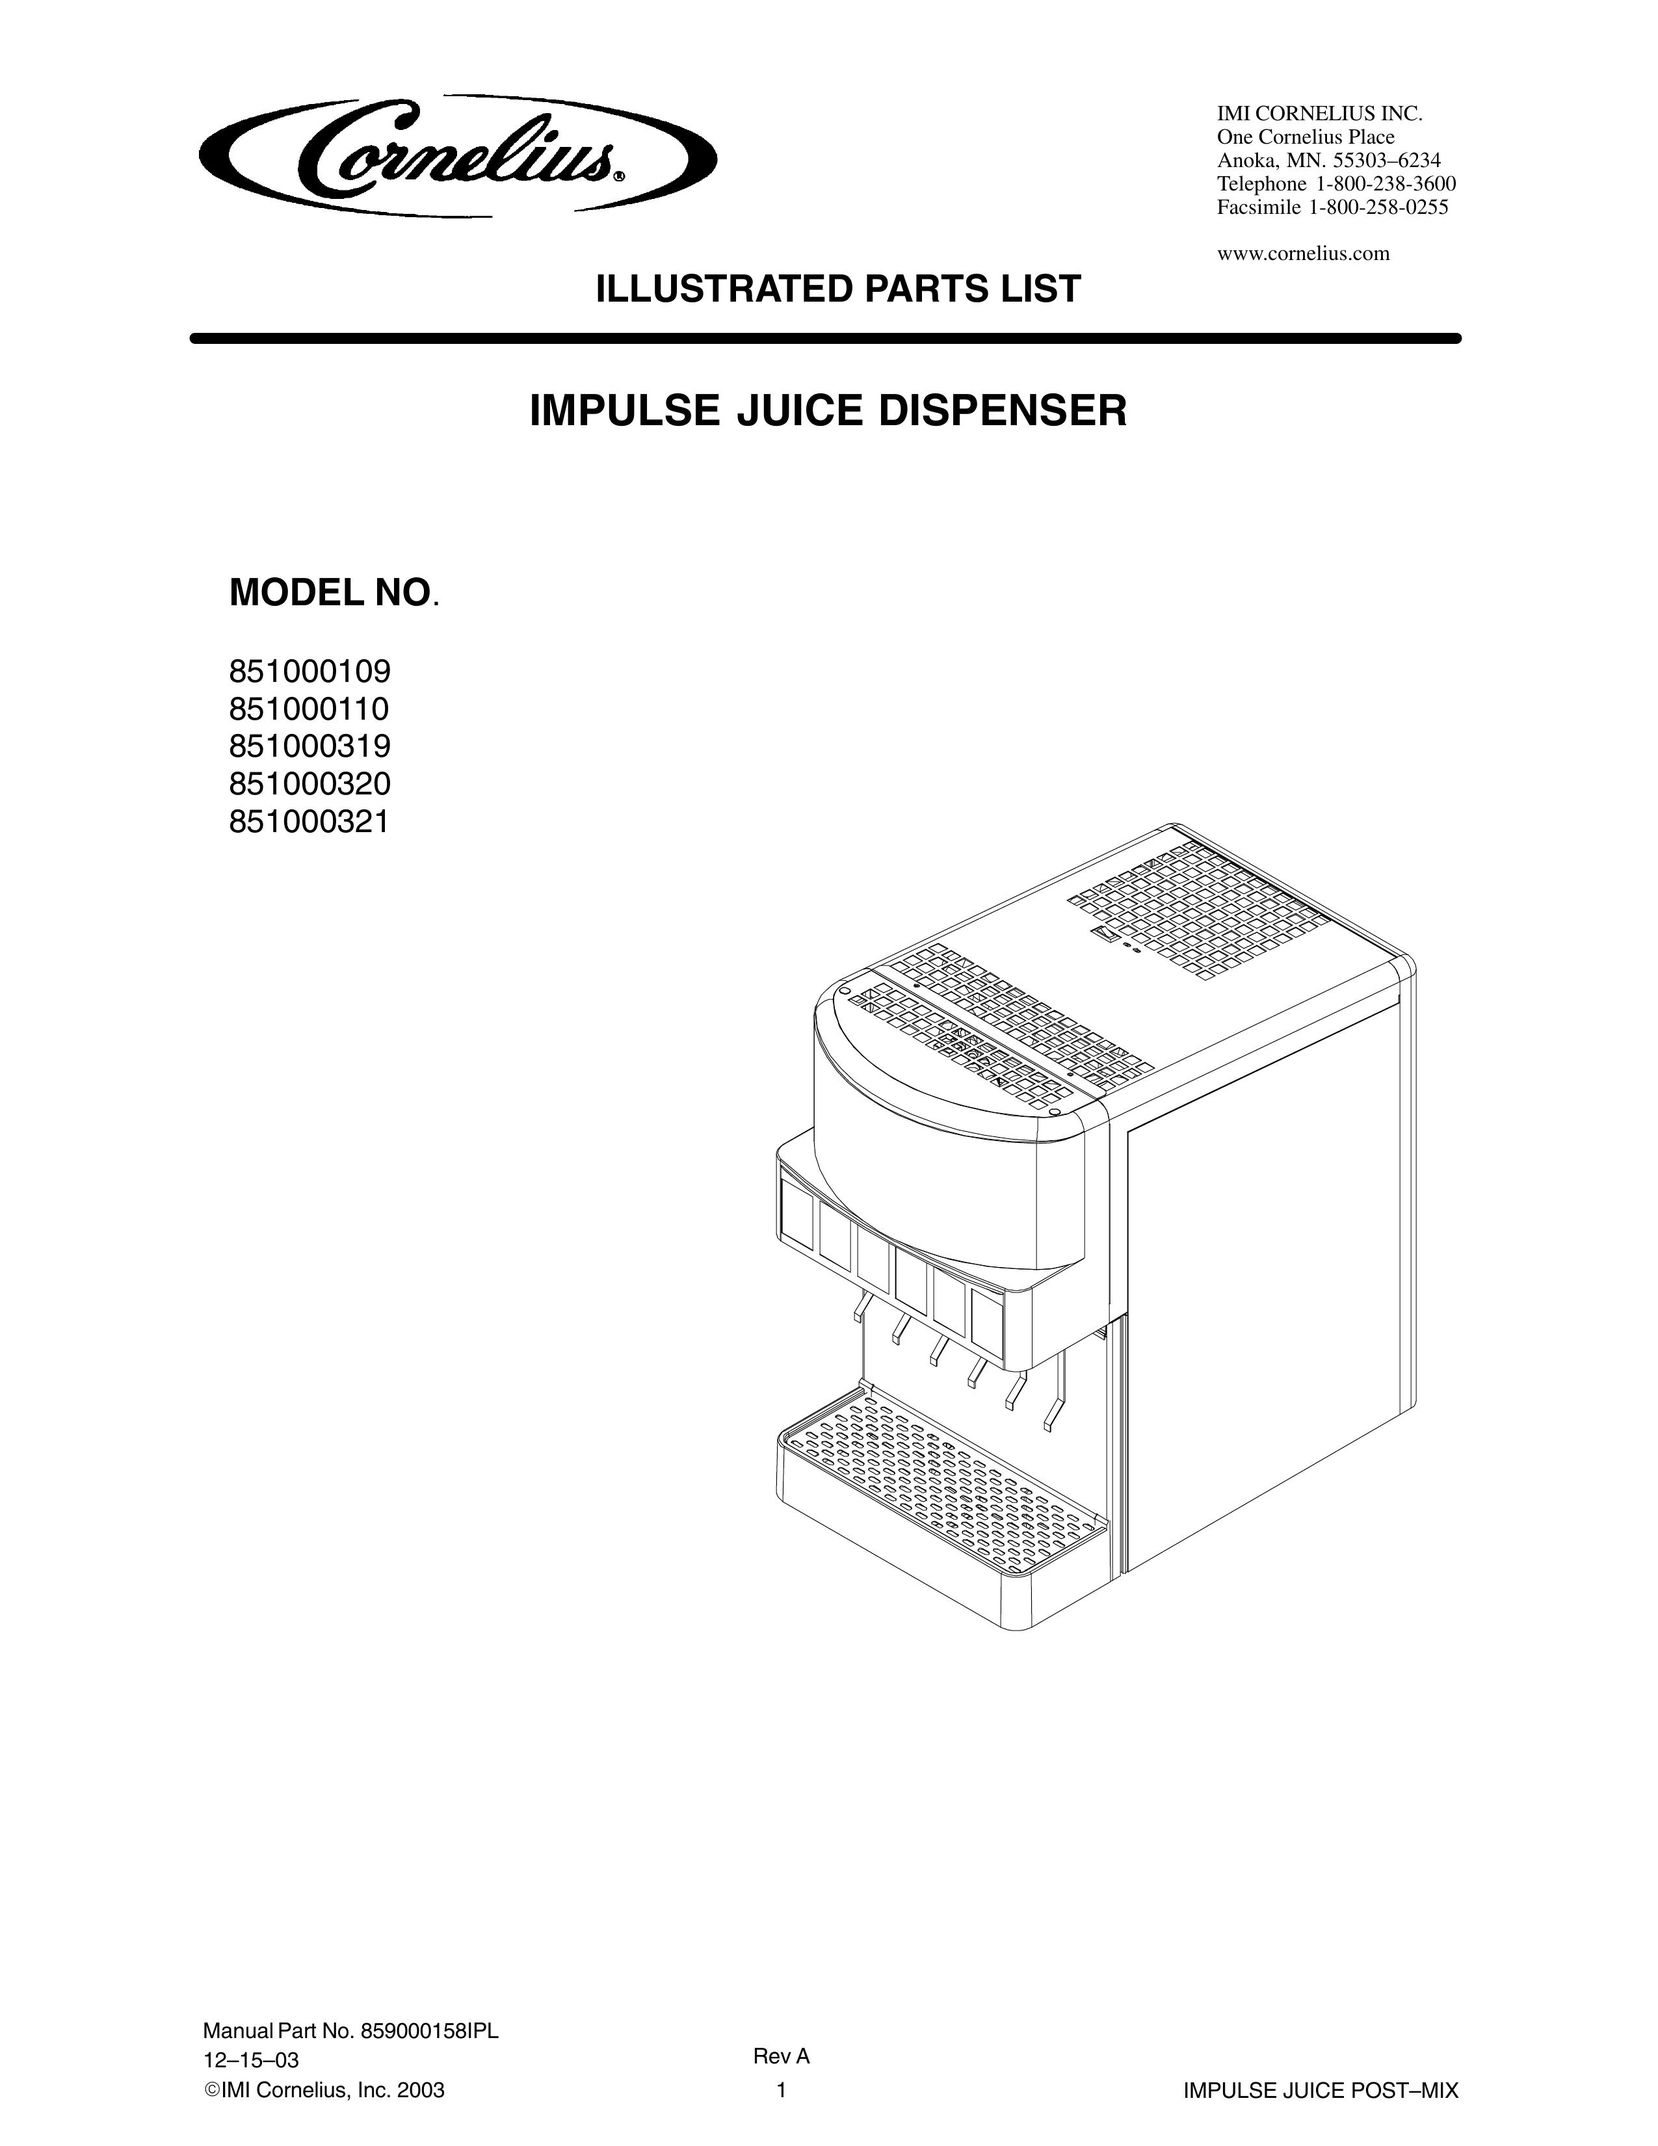 Panasonic 851000320 Juicer User Manual